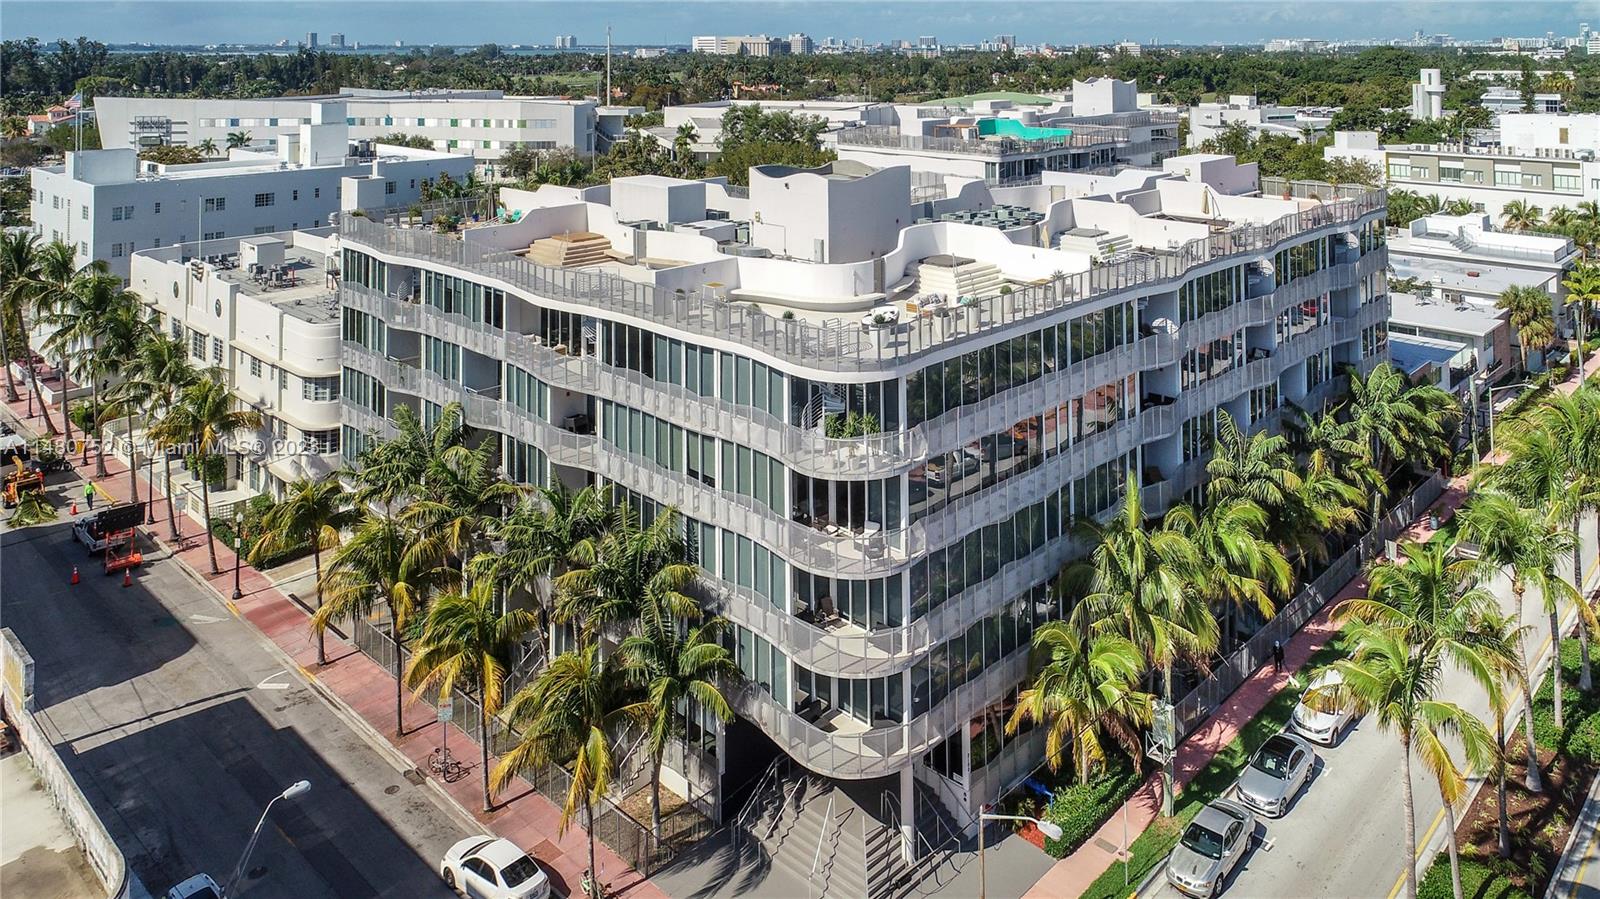 Property for Sale at 2100 Park Ave 108, Miami Beach, Miami-Dade County, Florida - Bedrooms: 1 
Bathrooms: 2  - $595,000